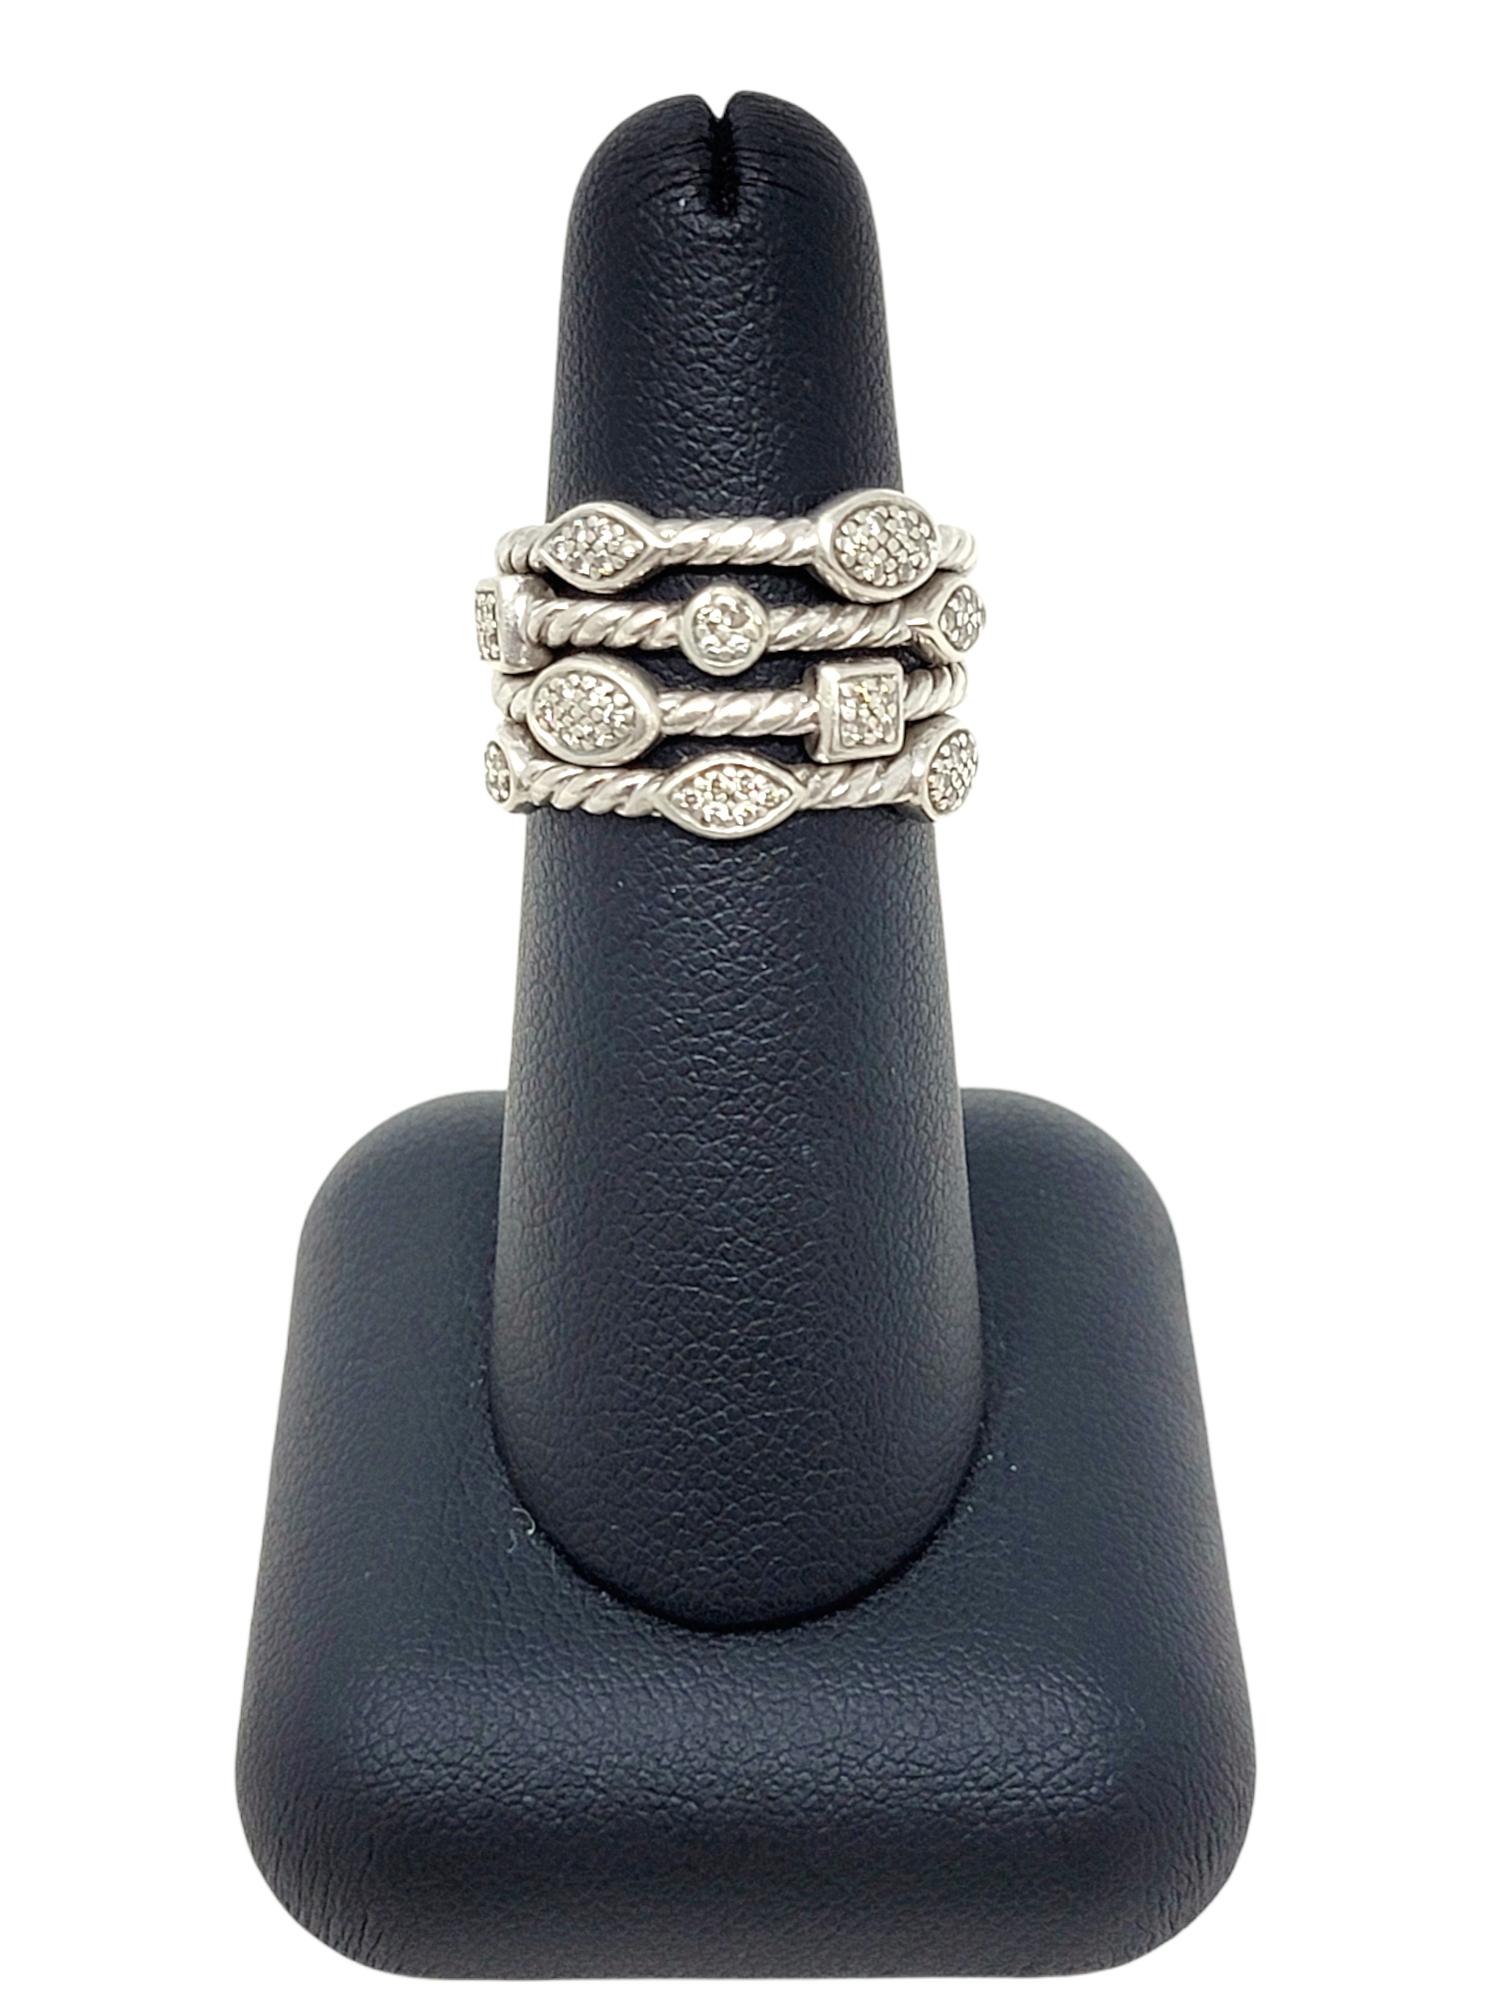 Women's David Yurman Pave Diamond Confetti 4 Row Cable Ring in Sterling Silver